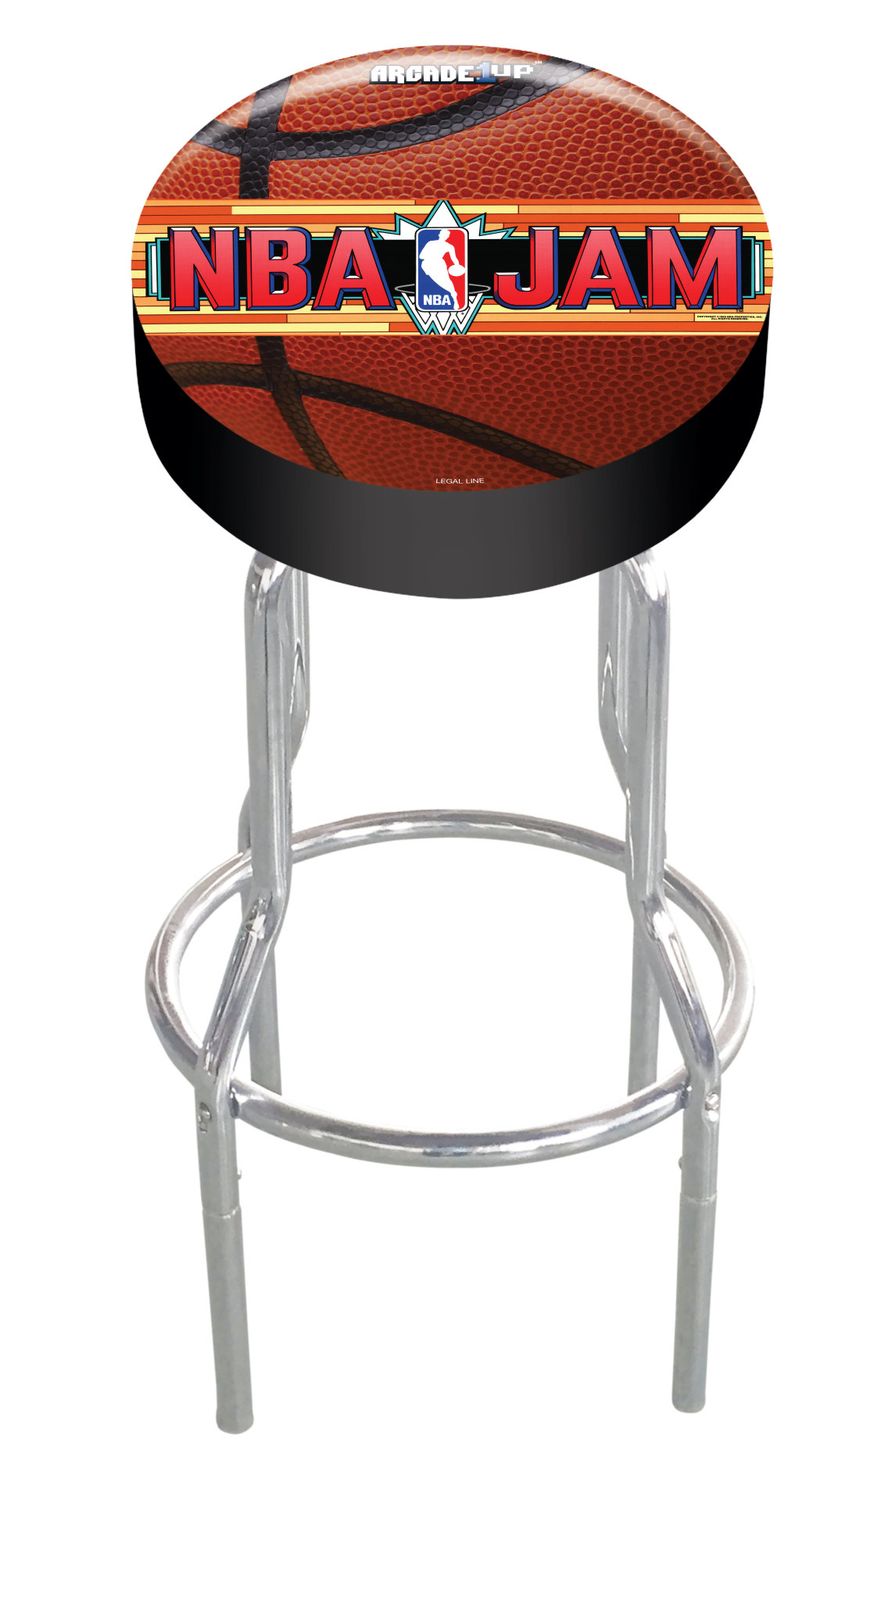 NBA Jam Adjustable Stool, Arcade1Up - image 2 of 2